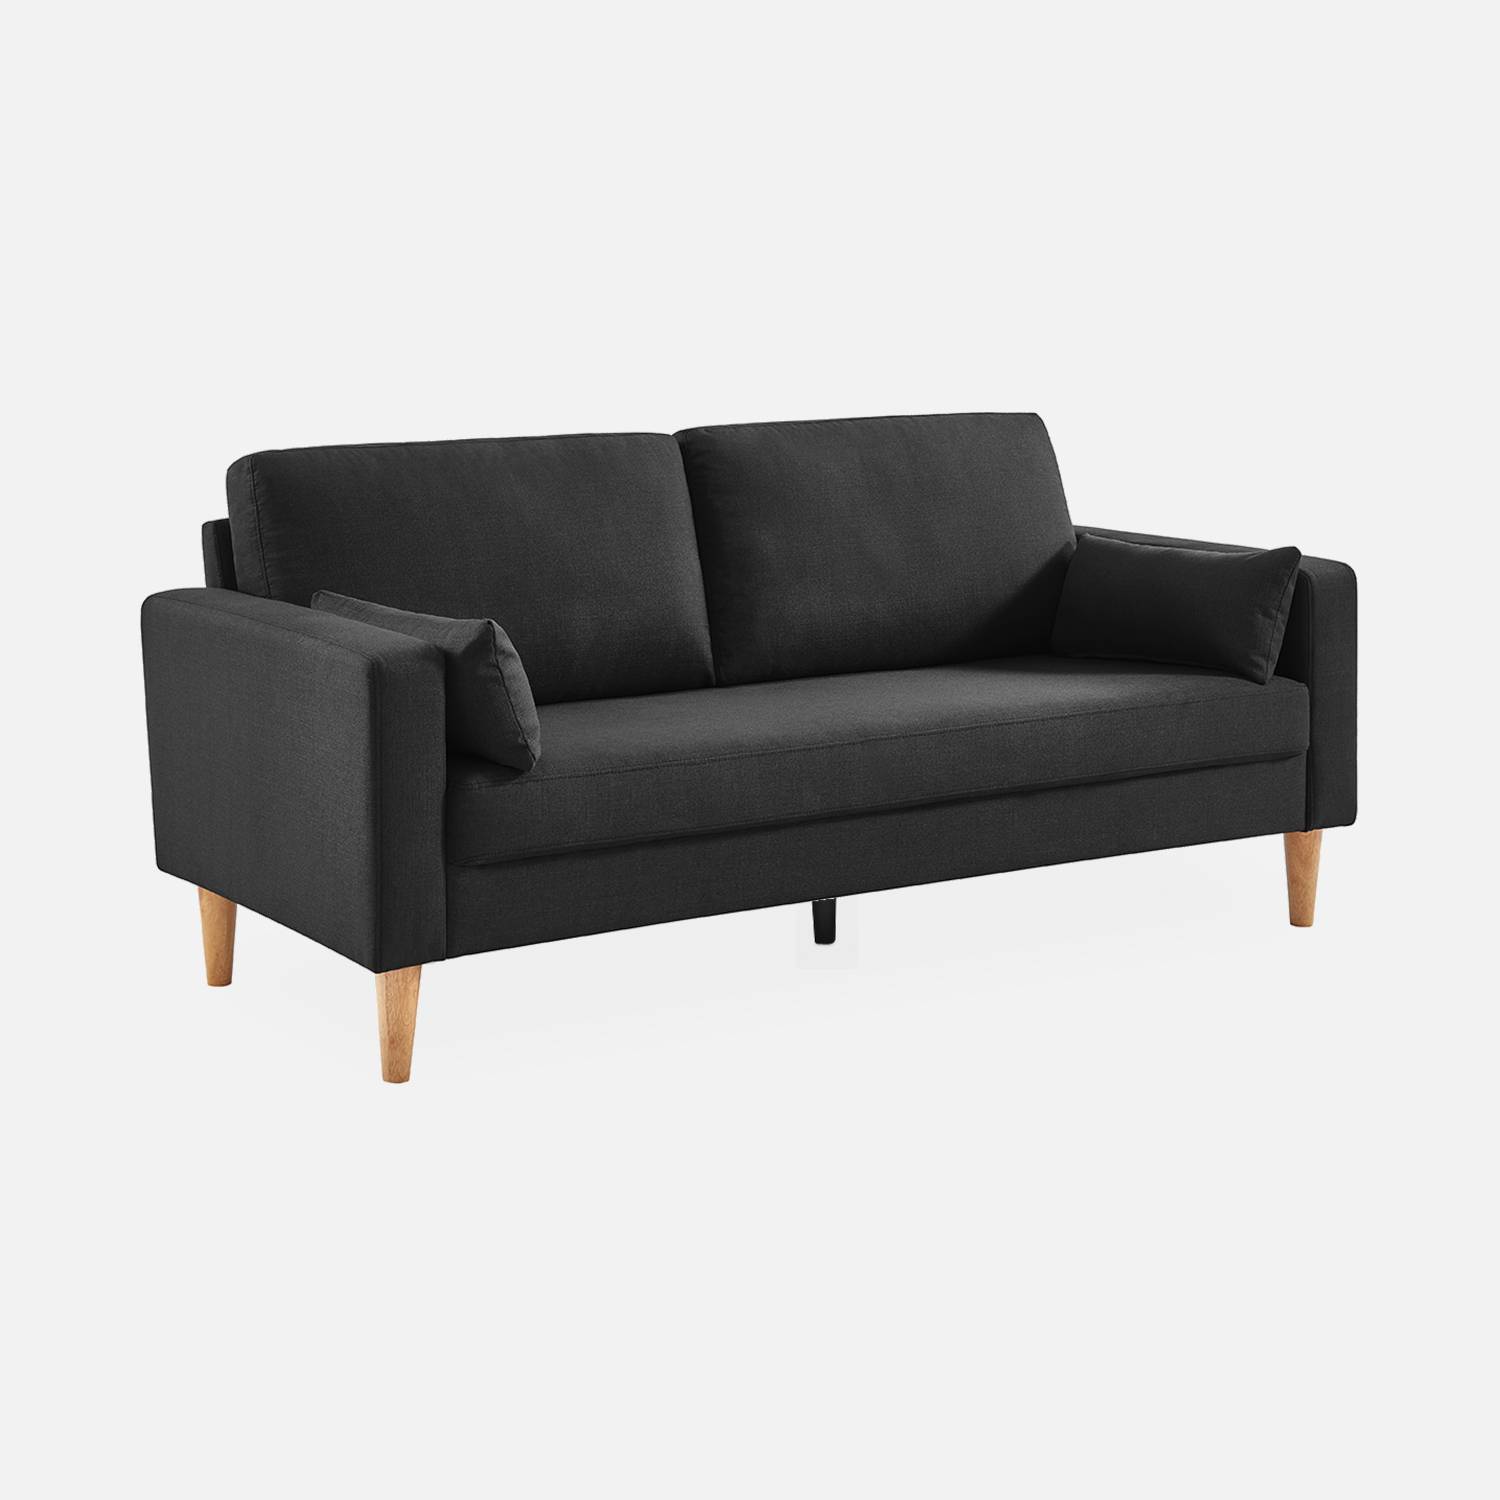 Gerades Sofa dunkelgrau meliert - Bjorn - 3er Sofa mit Holzbeinen in skandinavischem Design | sweeek